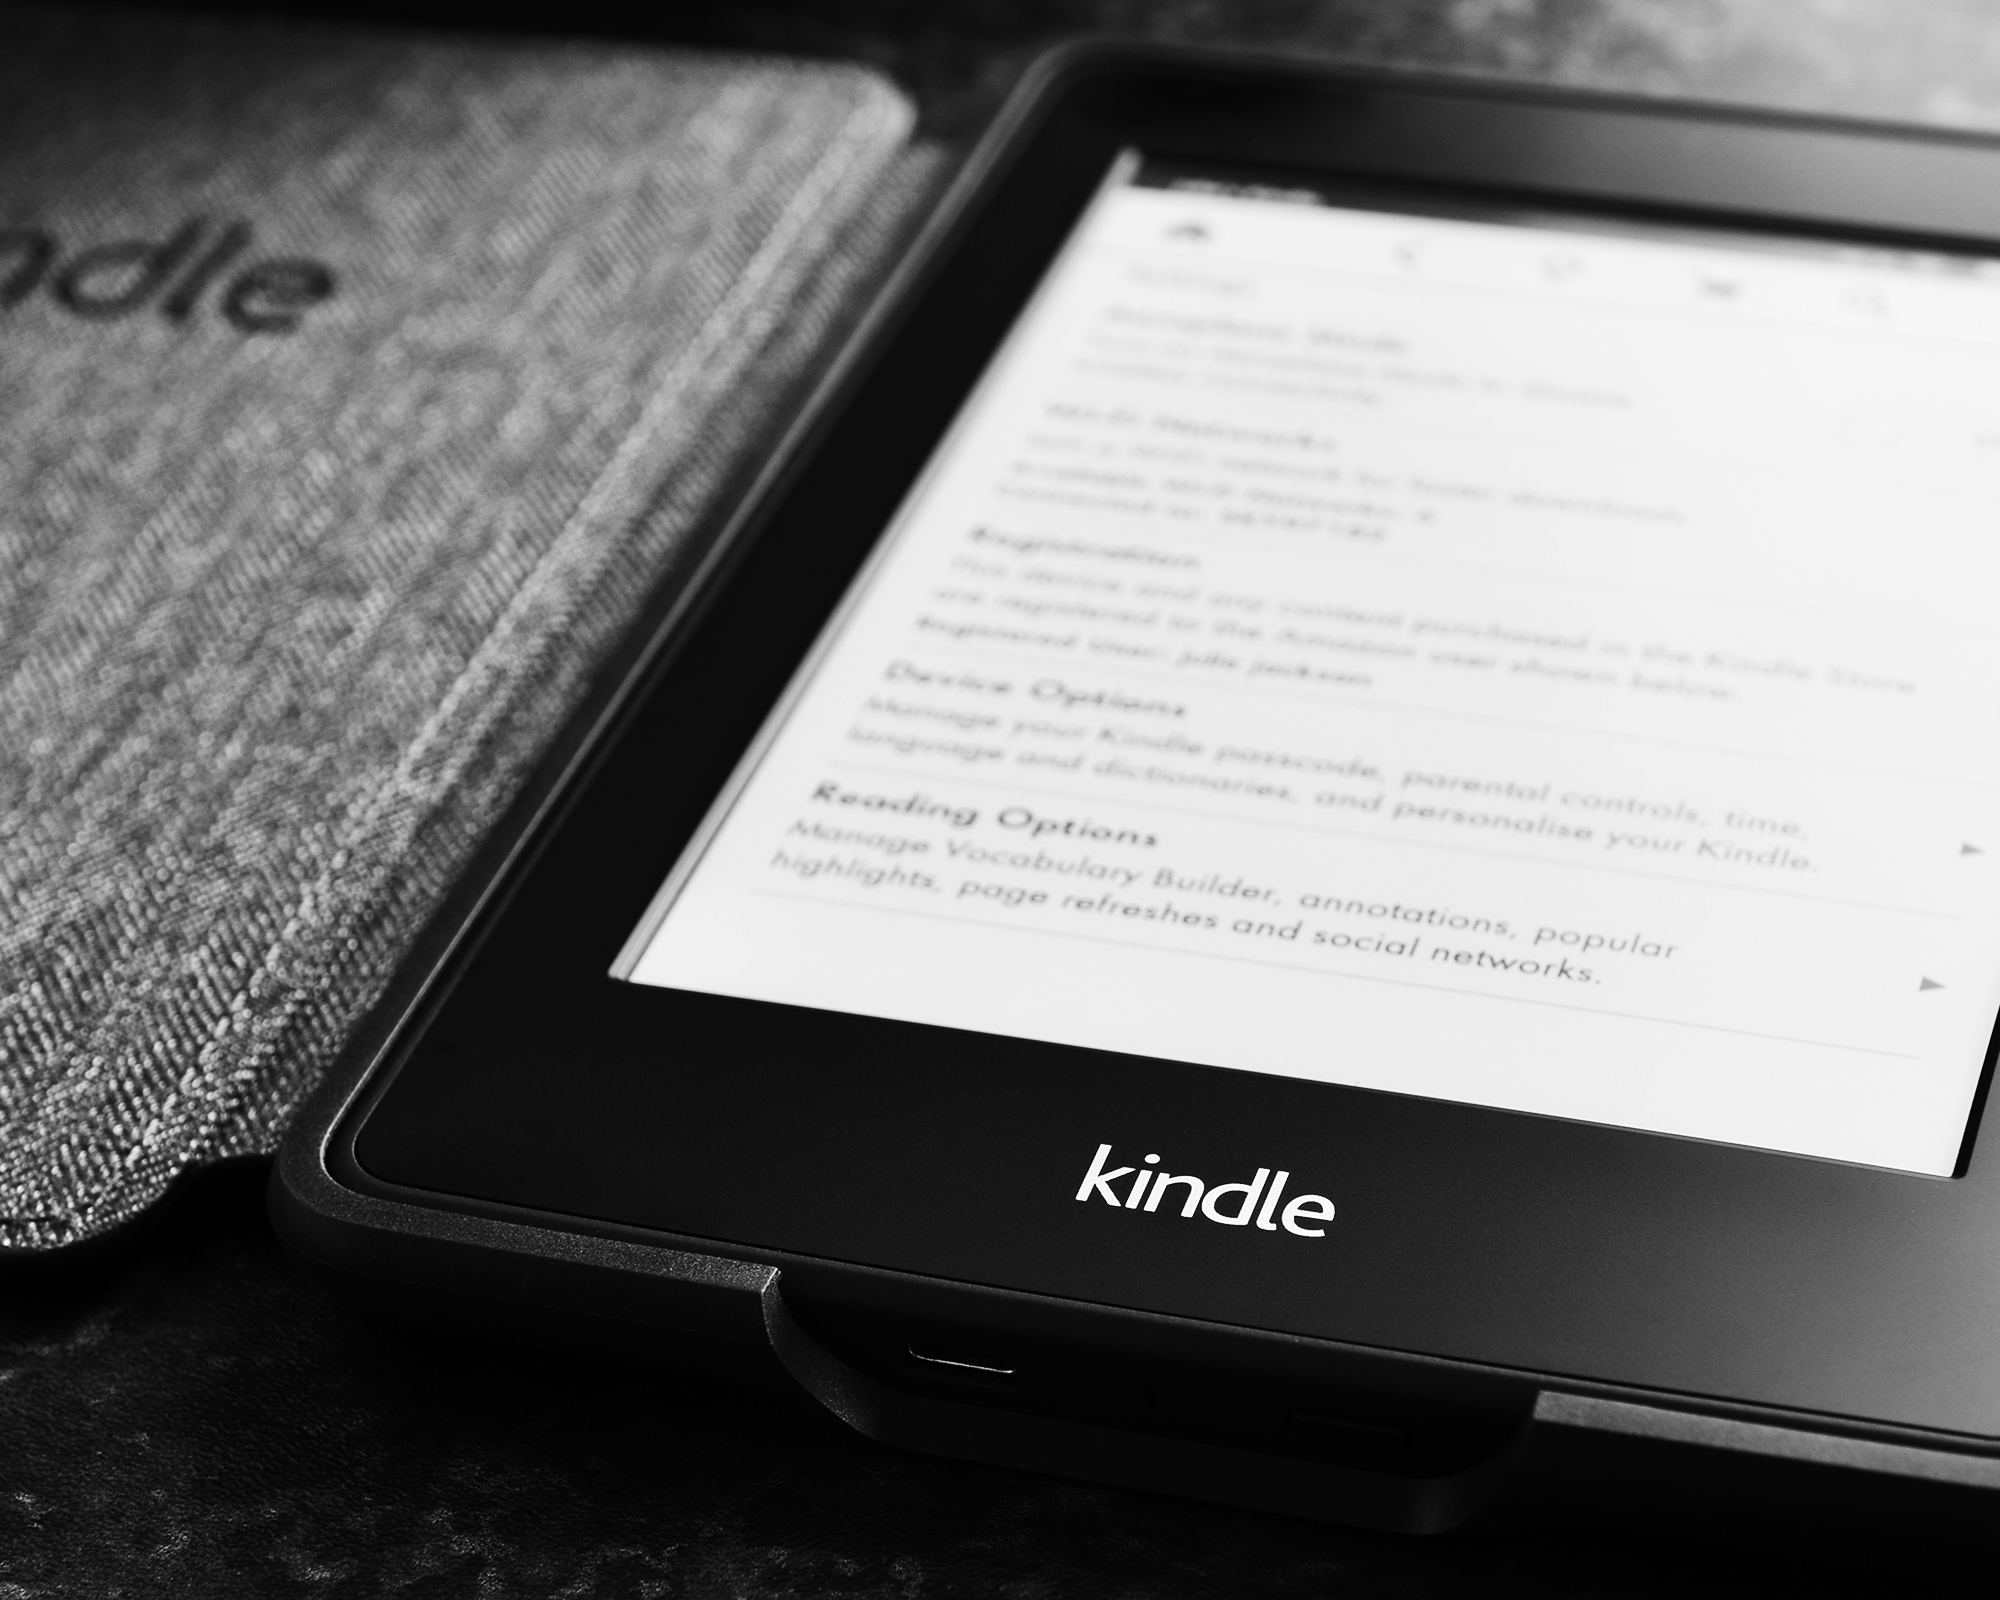 Amazon Announces Word Limit for Kindle Books